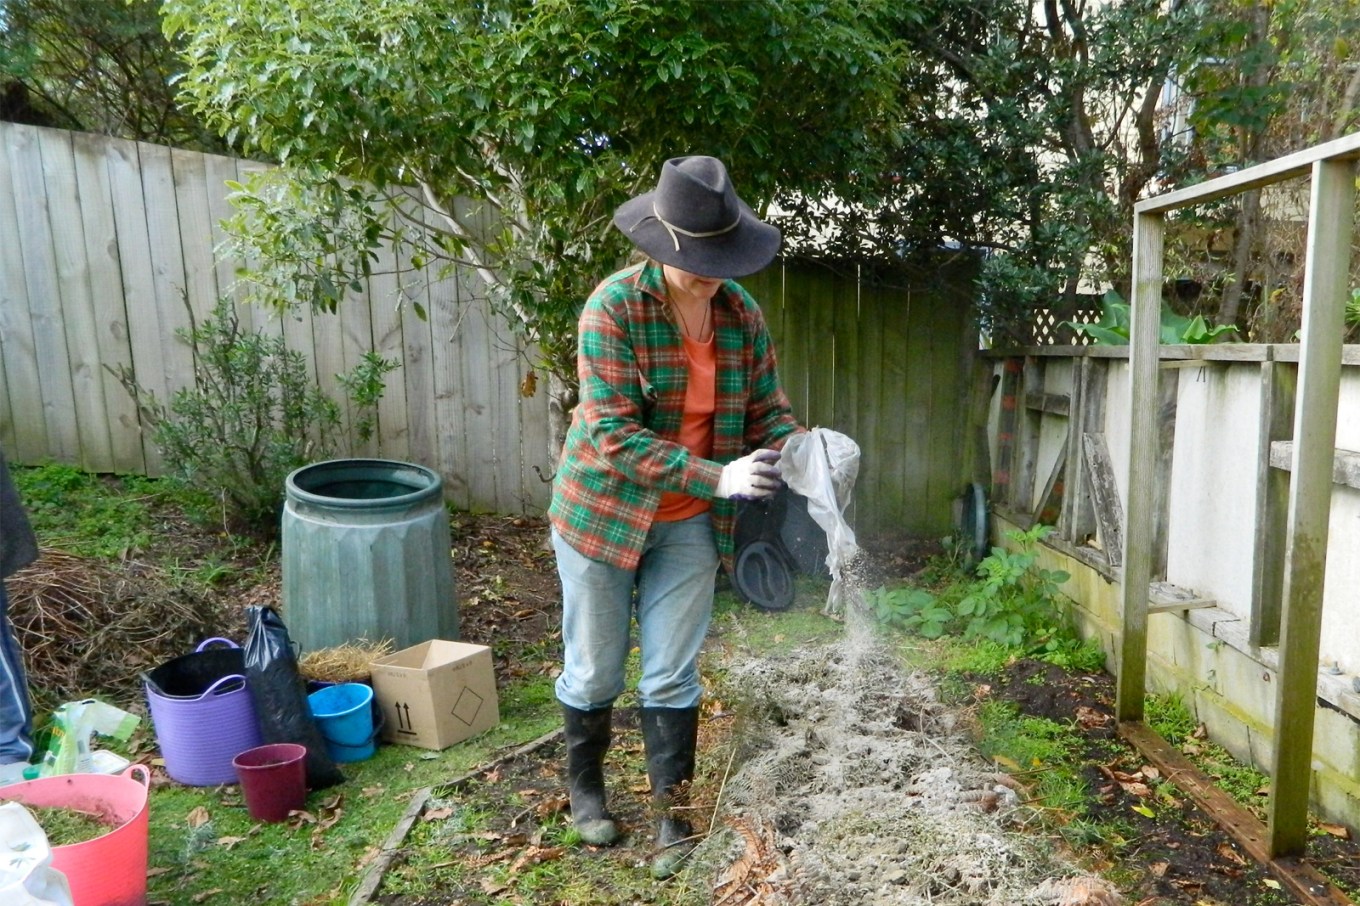 Spreading wood ash fertilizer in a home garden